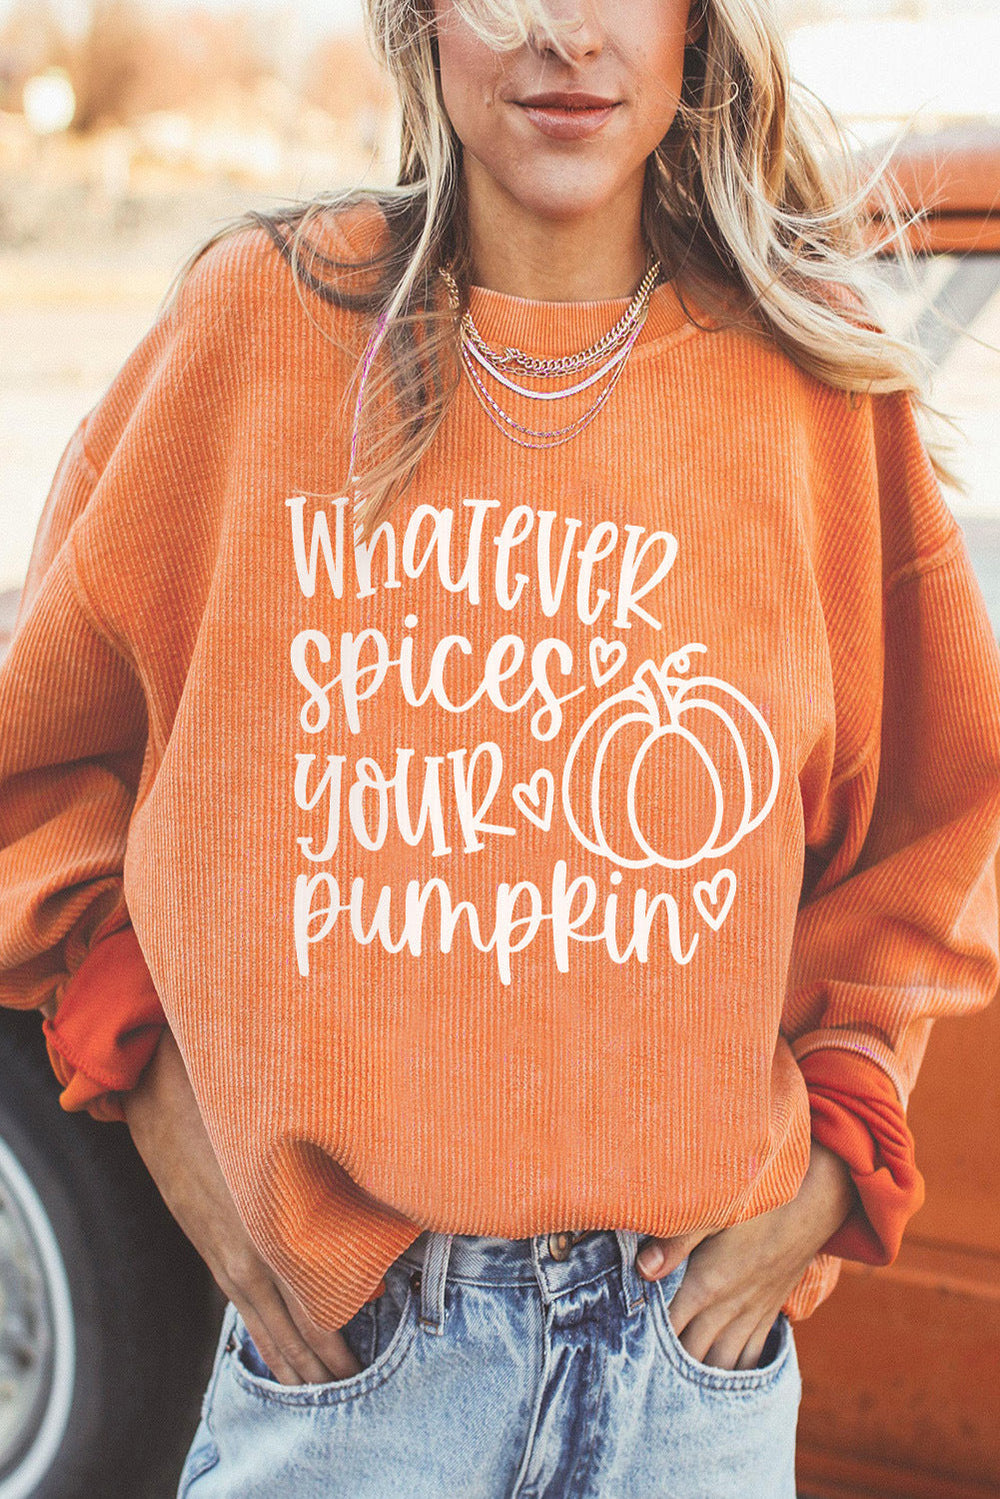 Halloween Pumpkin Head Sweater Women Loose round Neck Pullover